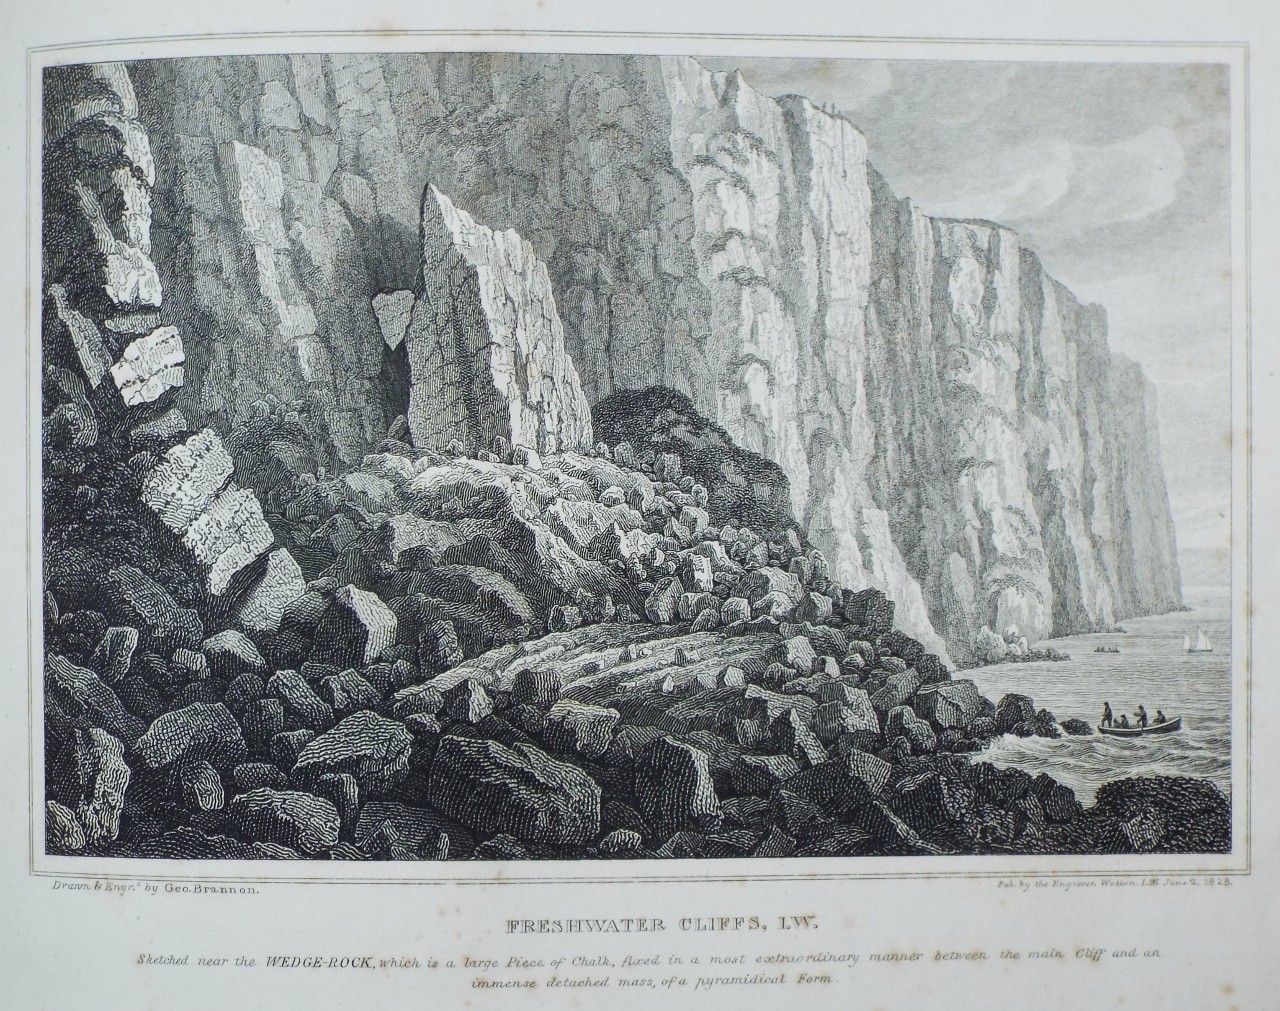 Print - Freshwater Cliffs, I. W. - Brannon